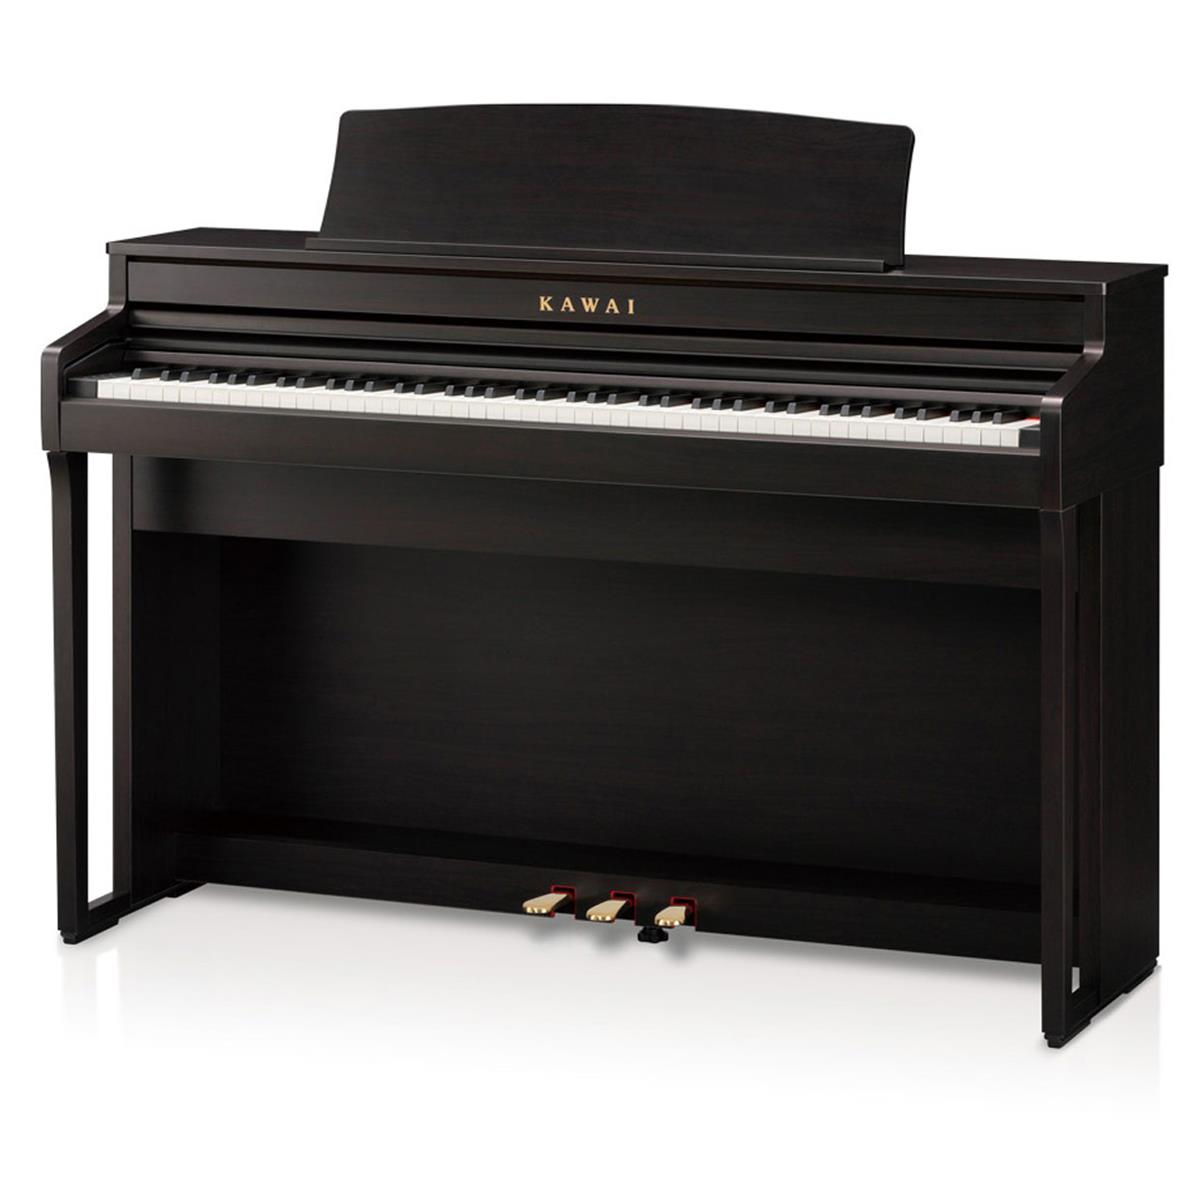 Kawai CA49 88-Key Grand Feel Compact Digital Piano with Bench $1499 + free s/h